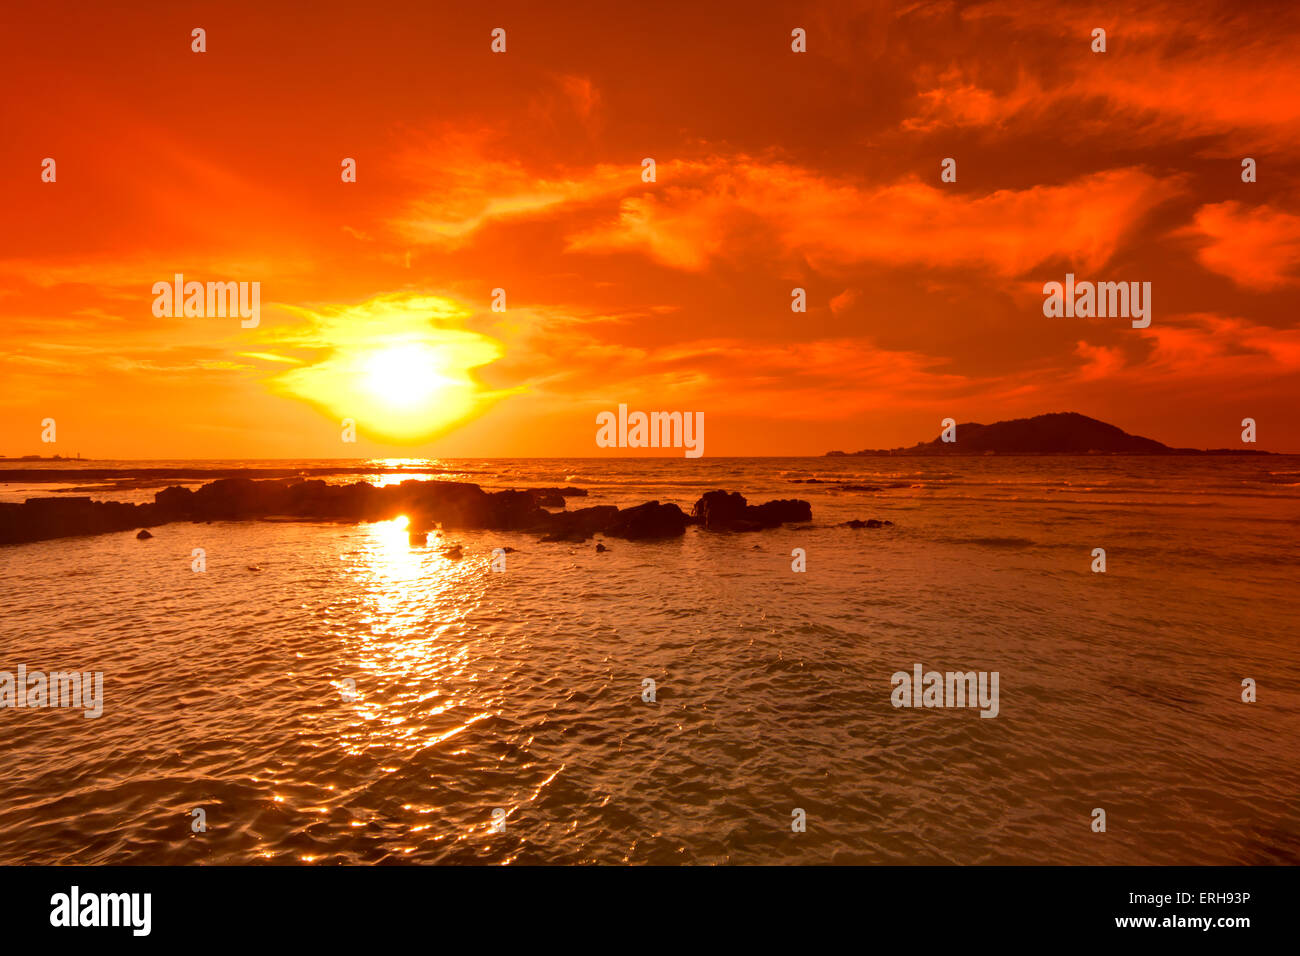 Sunset seascape and volcano, Cheju island, Korea. Stock Photo